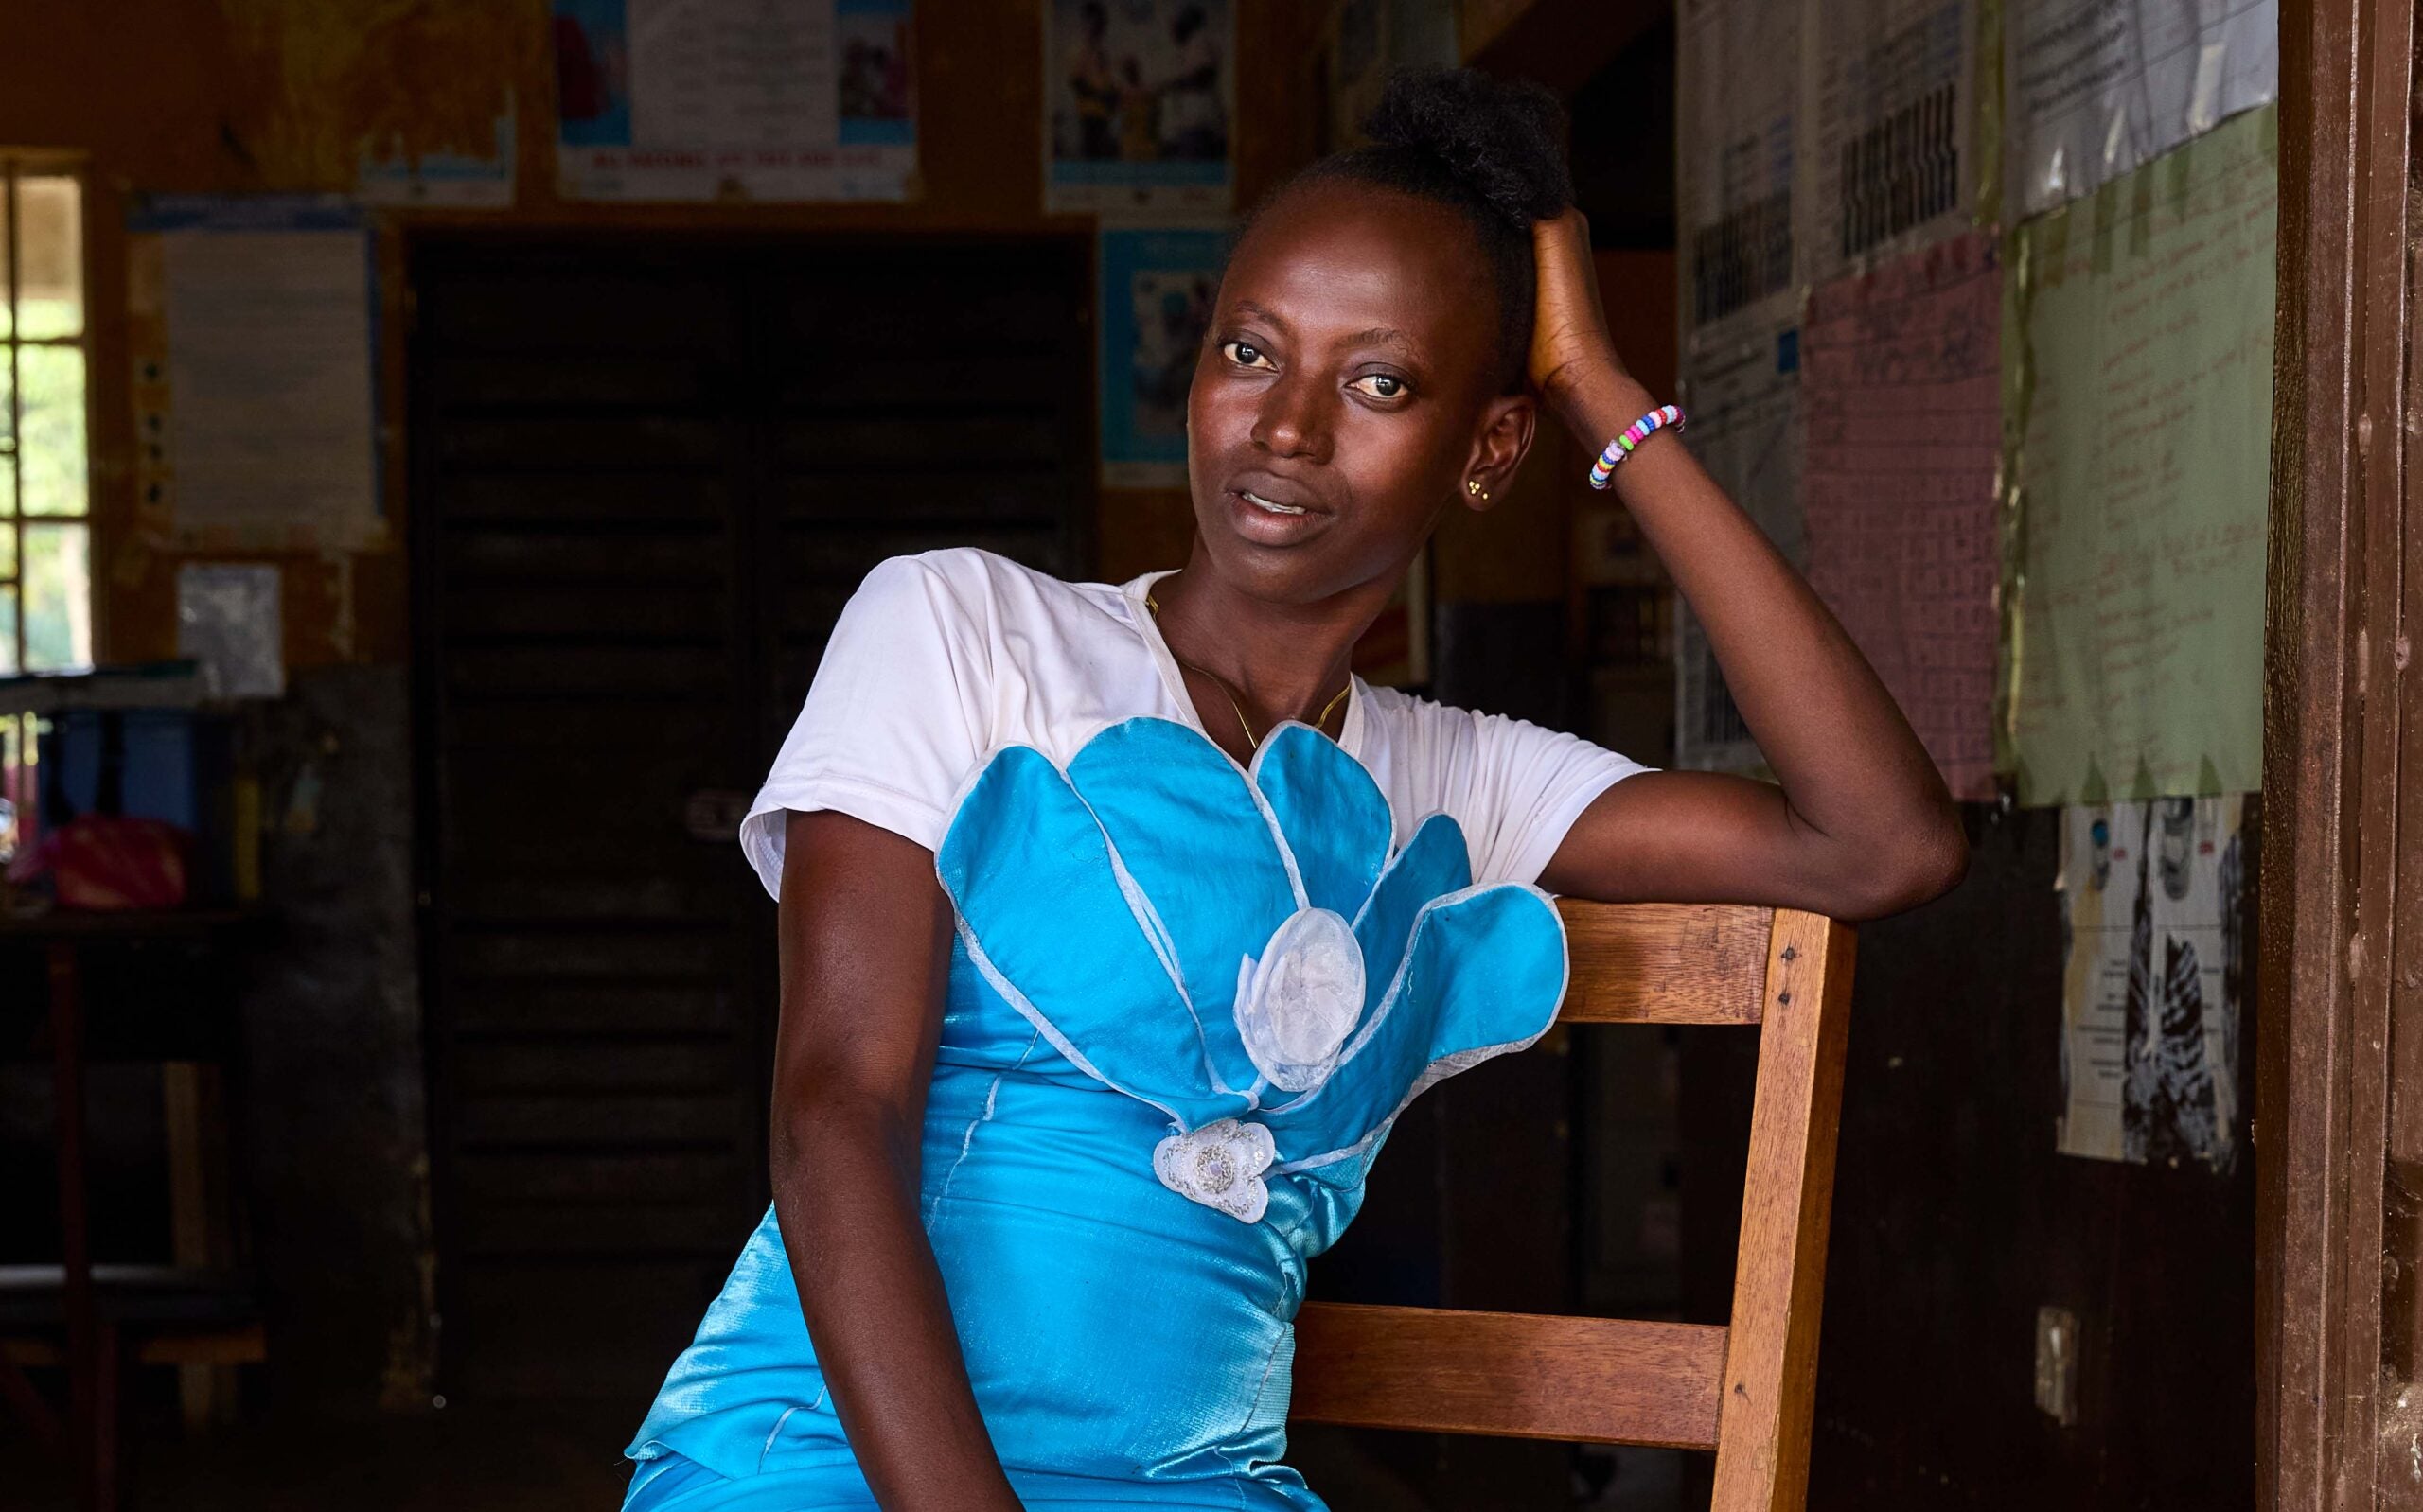 She Leads the World: The Best-Dressed Nurse in Sierra Leone